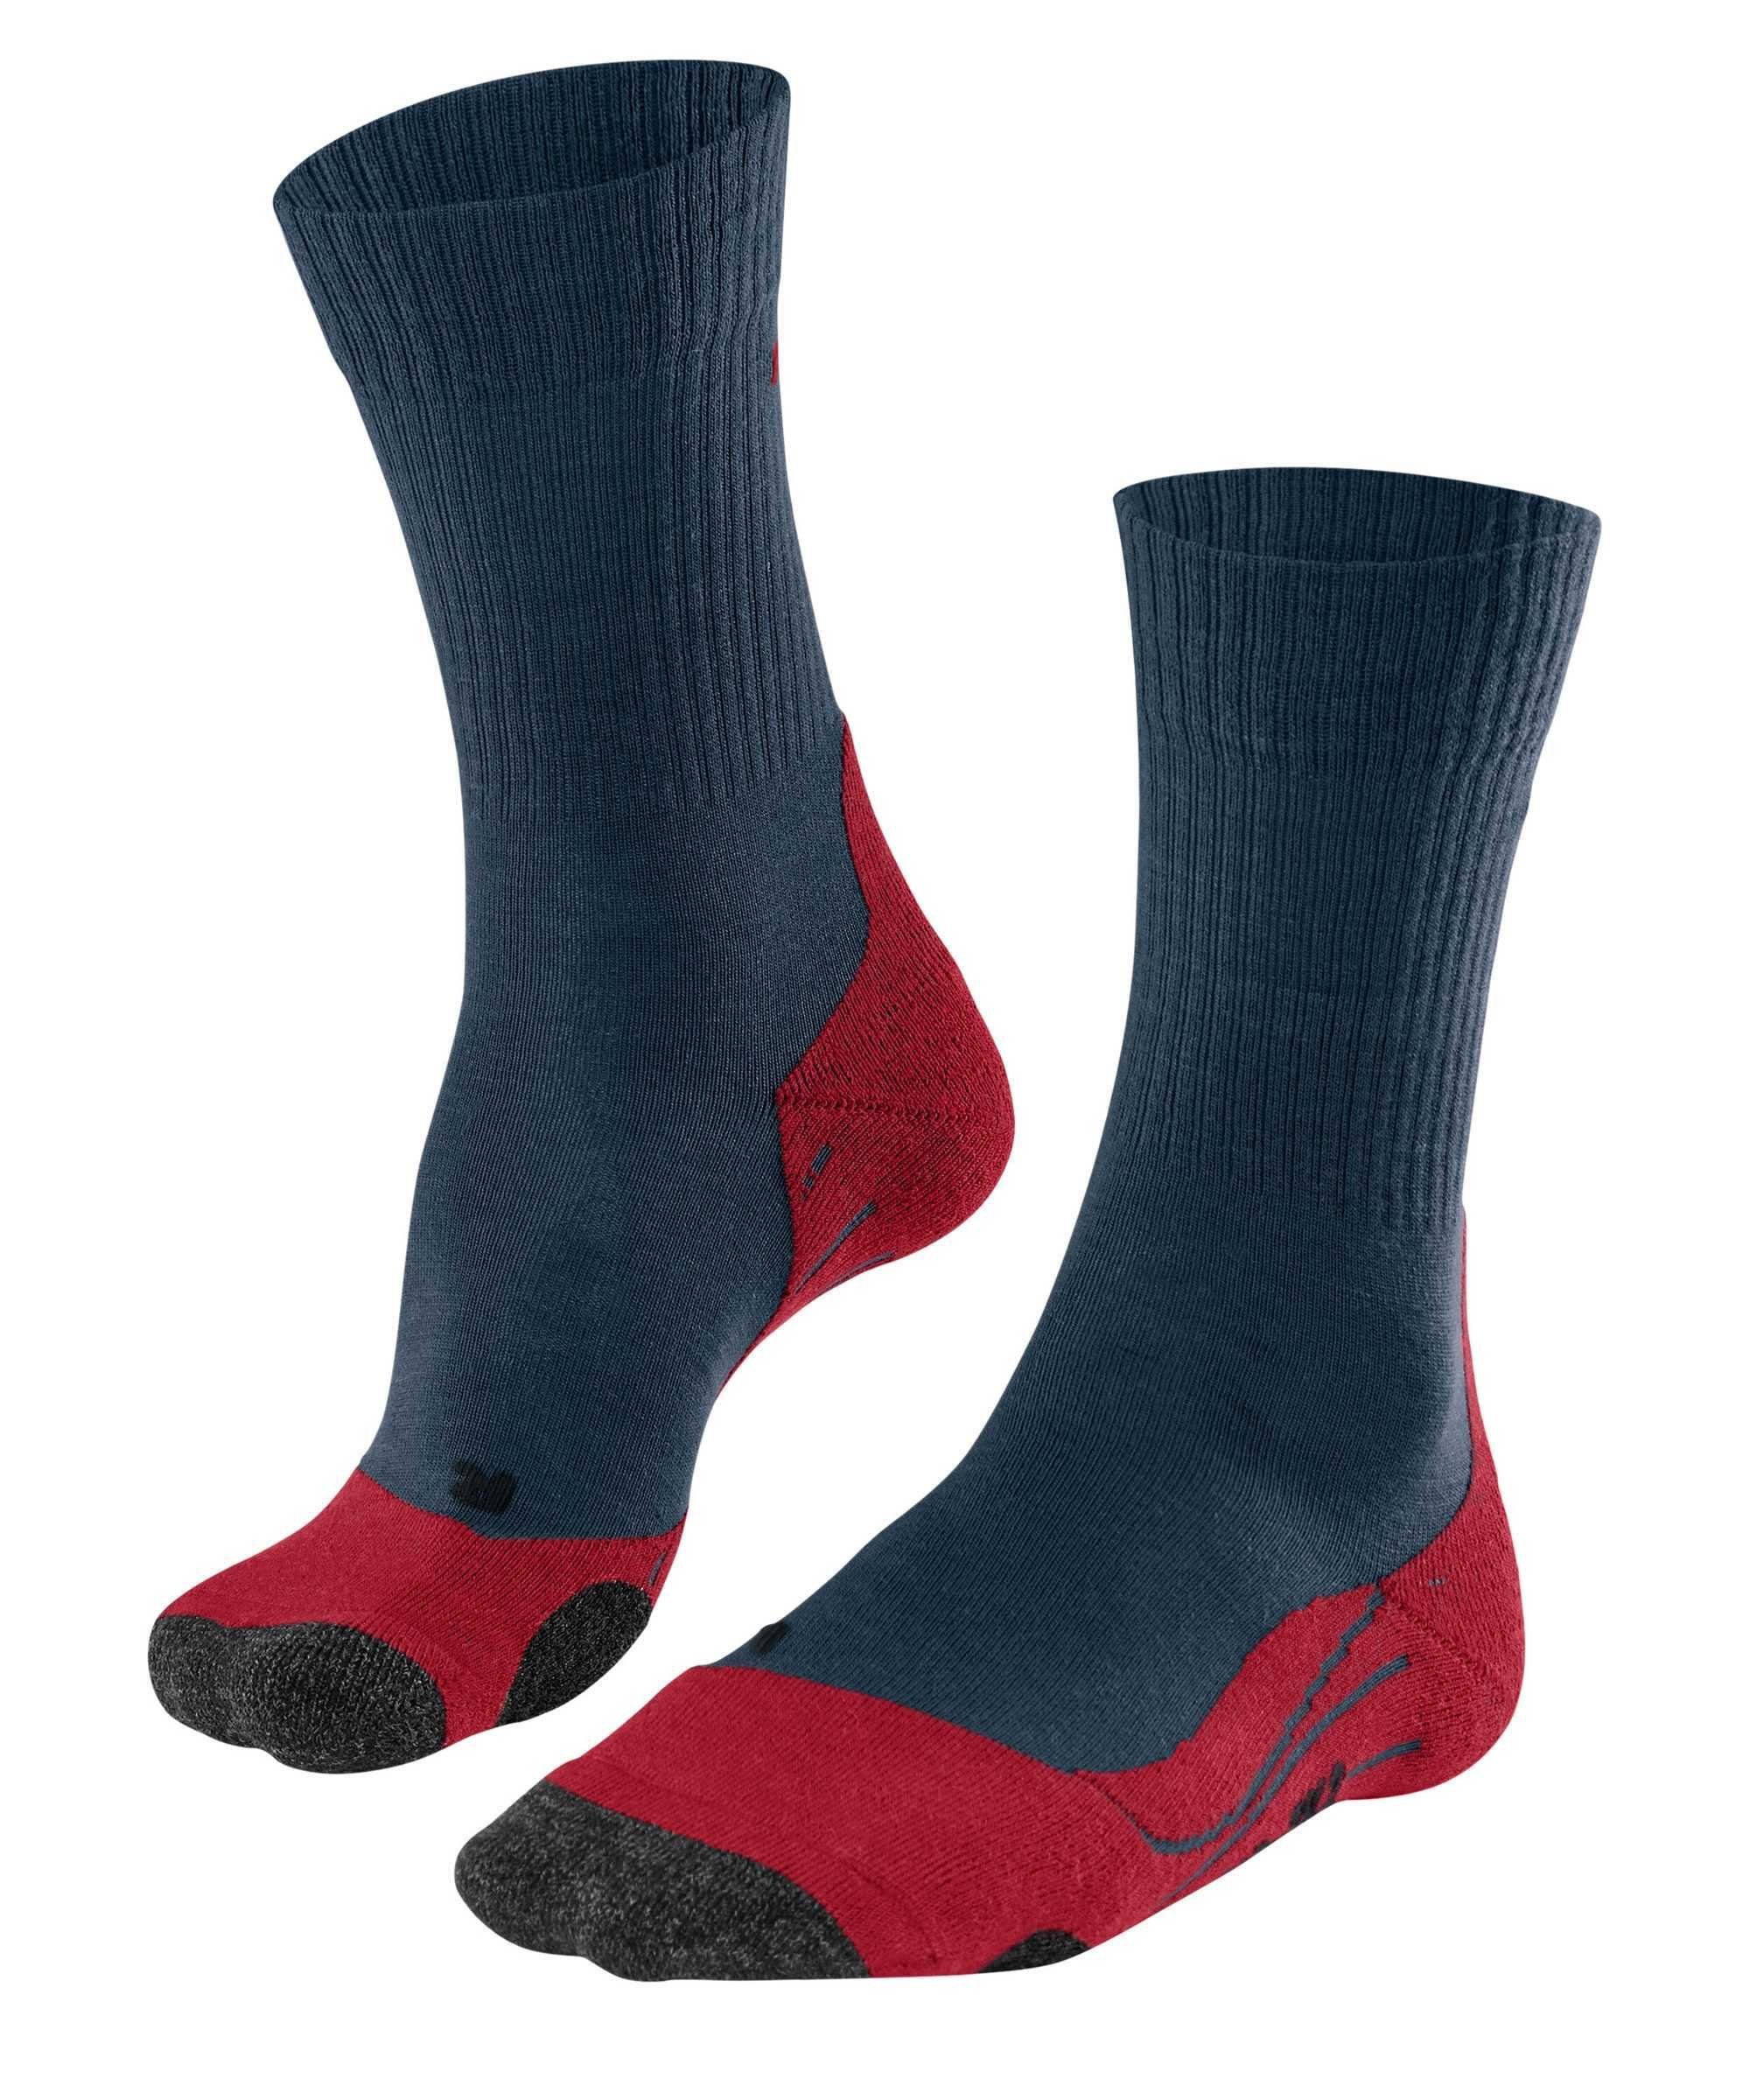 FALKE Sportsocken Herren Socken - Trekking Socken TK2, Polsterung Blau/Rot (Nautica)